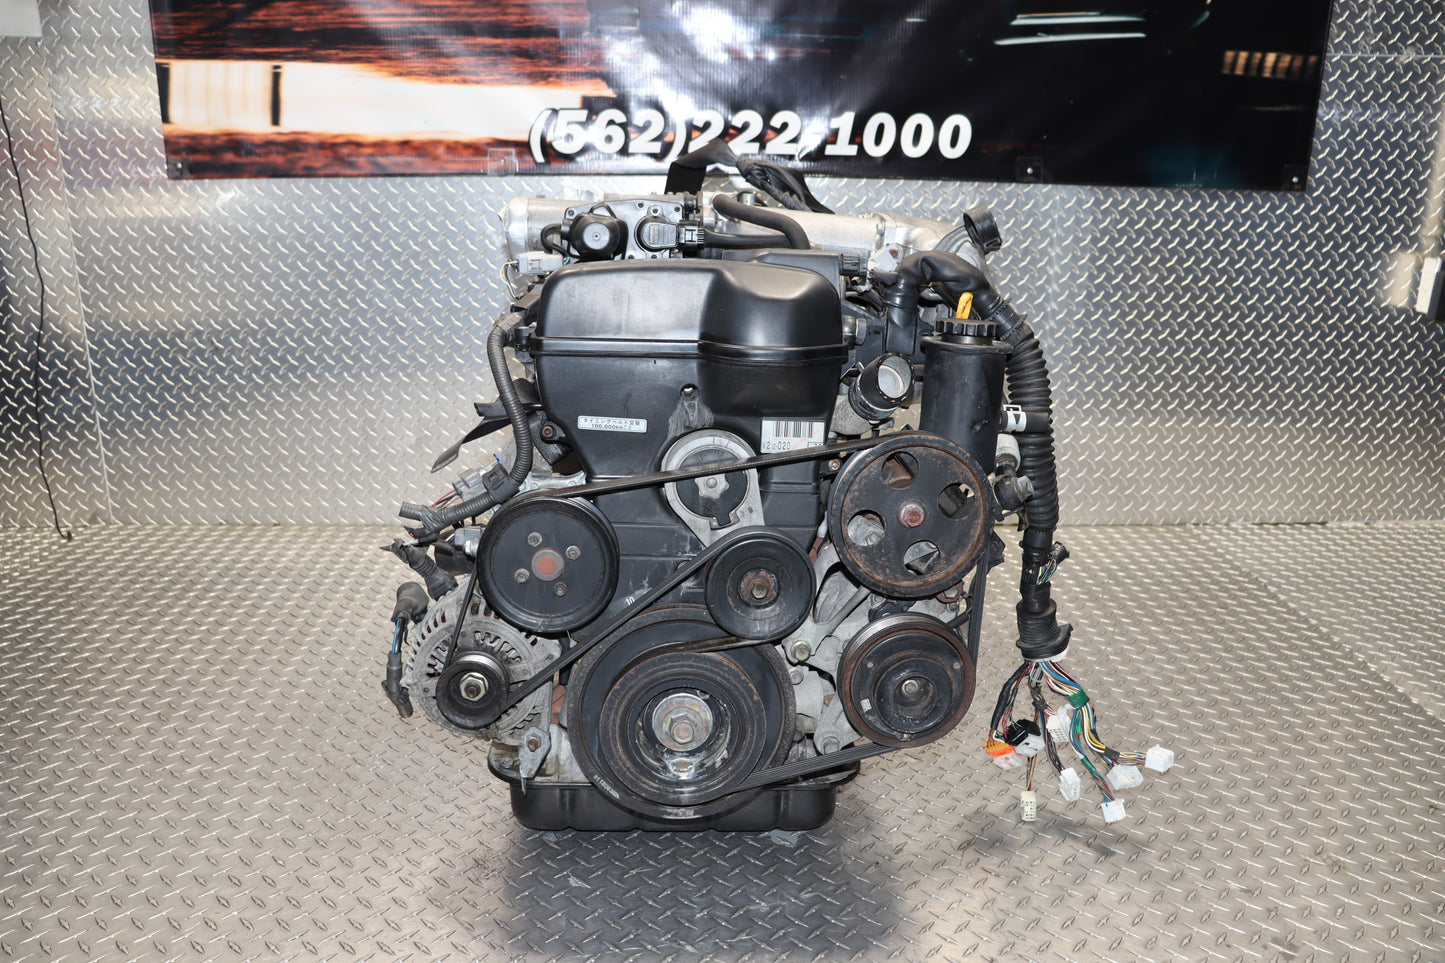 JDM 2JZ-GE VVT-i Toyota Lexus GS300 IS300 Engine NON TURBO 3.0L ENGINE ONLY